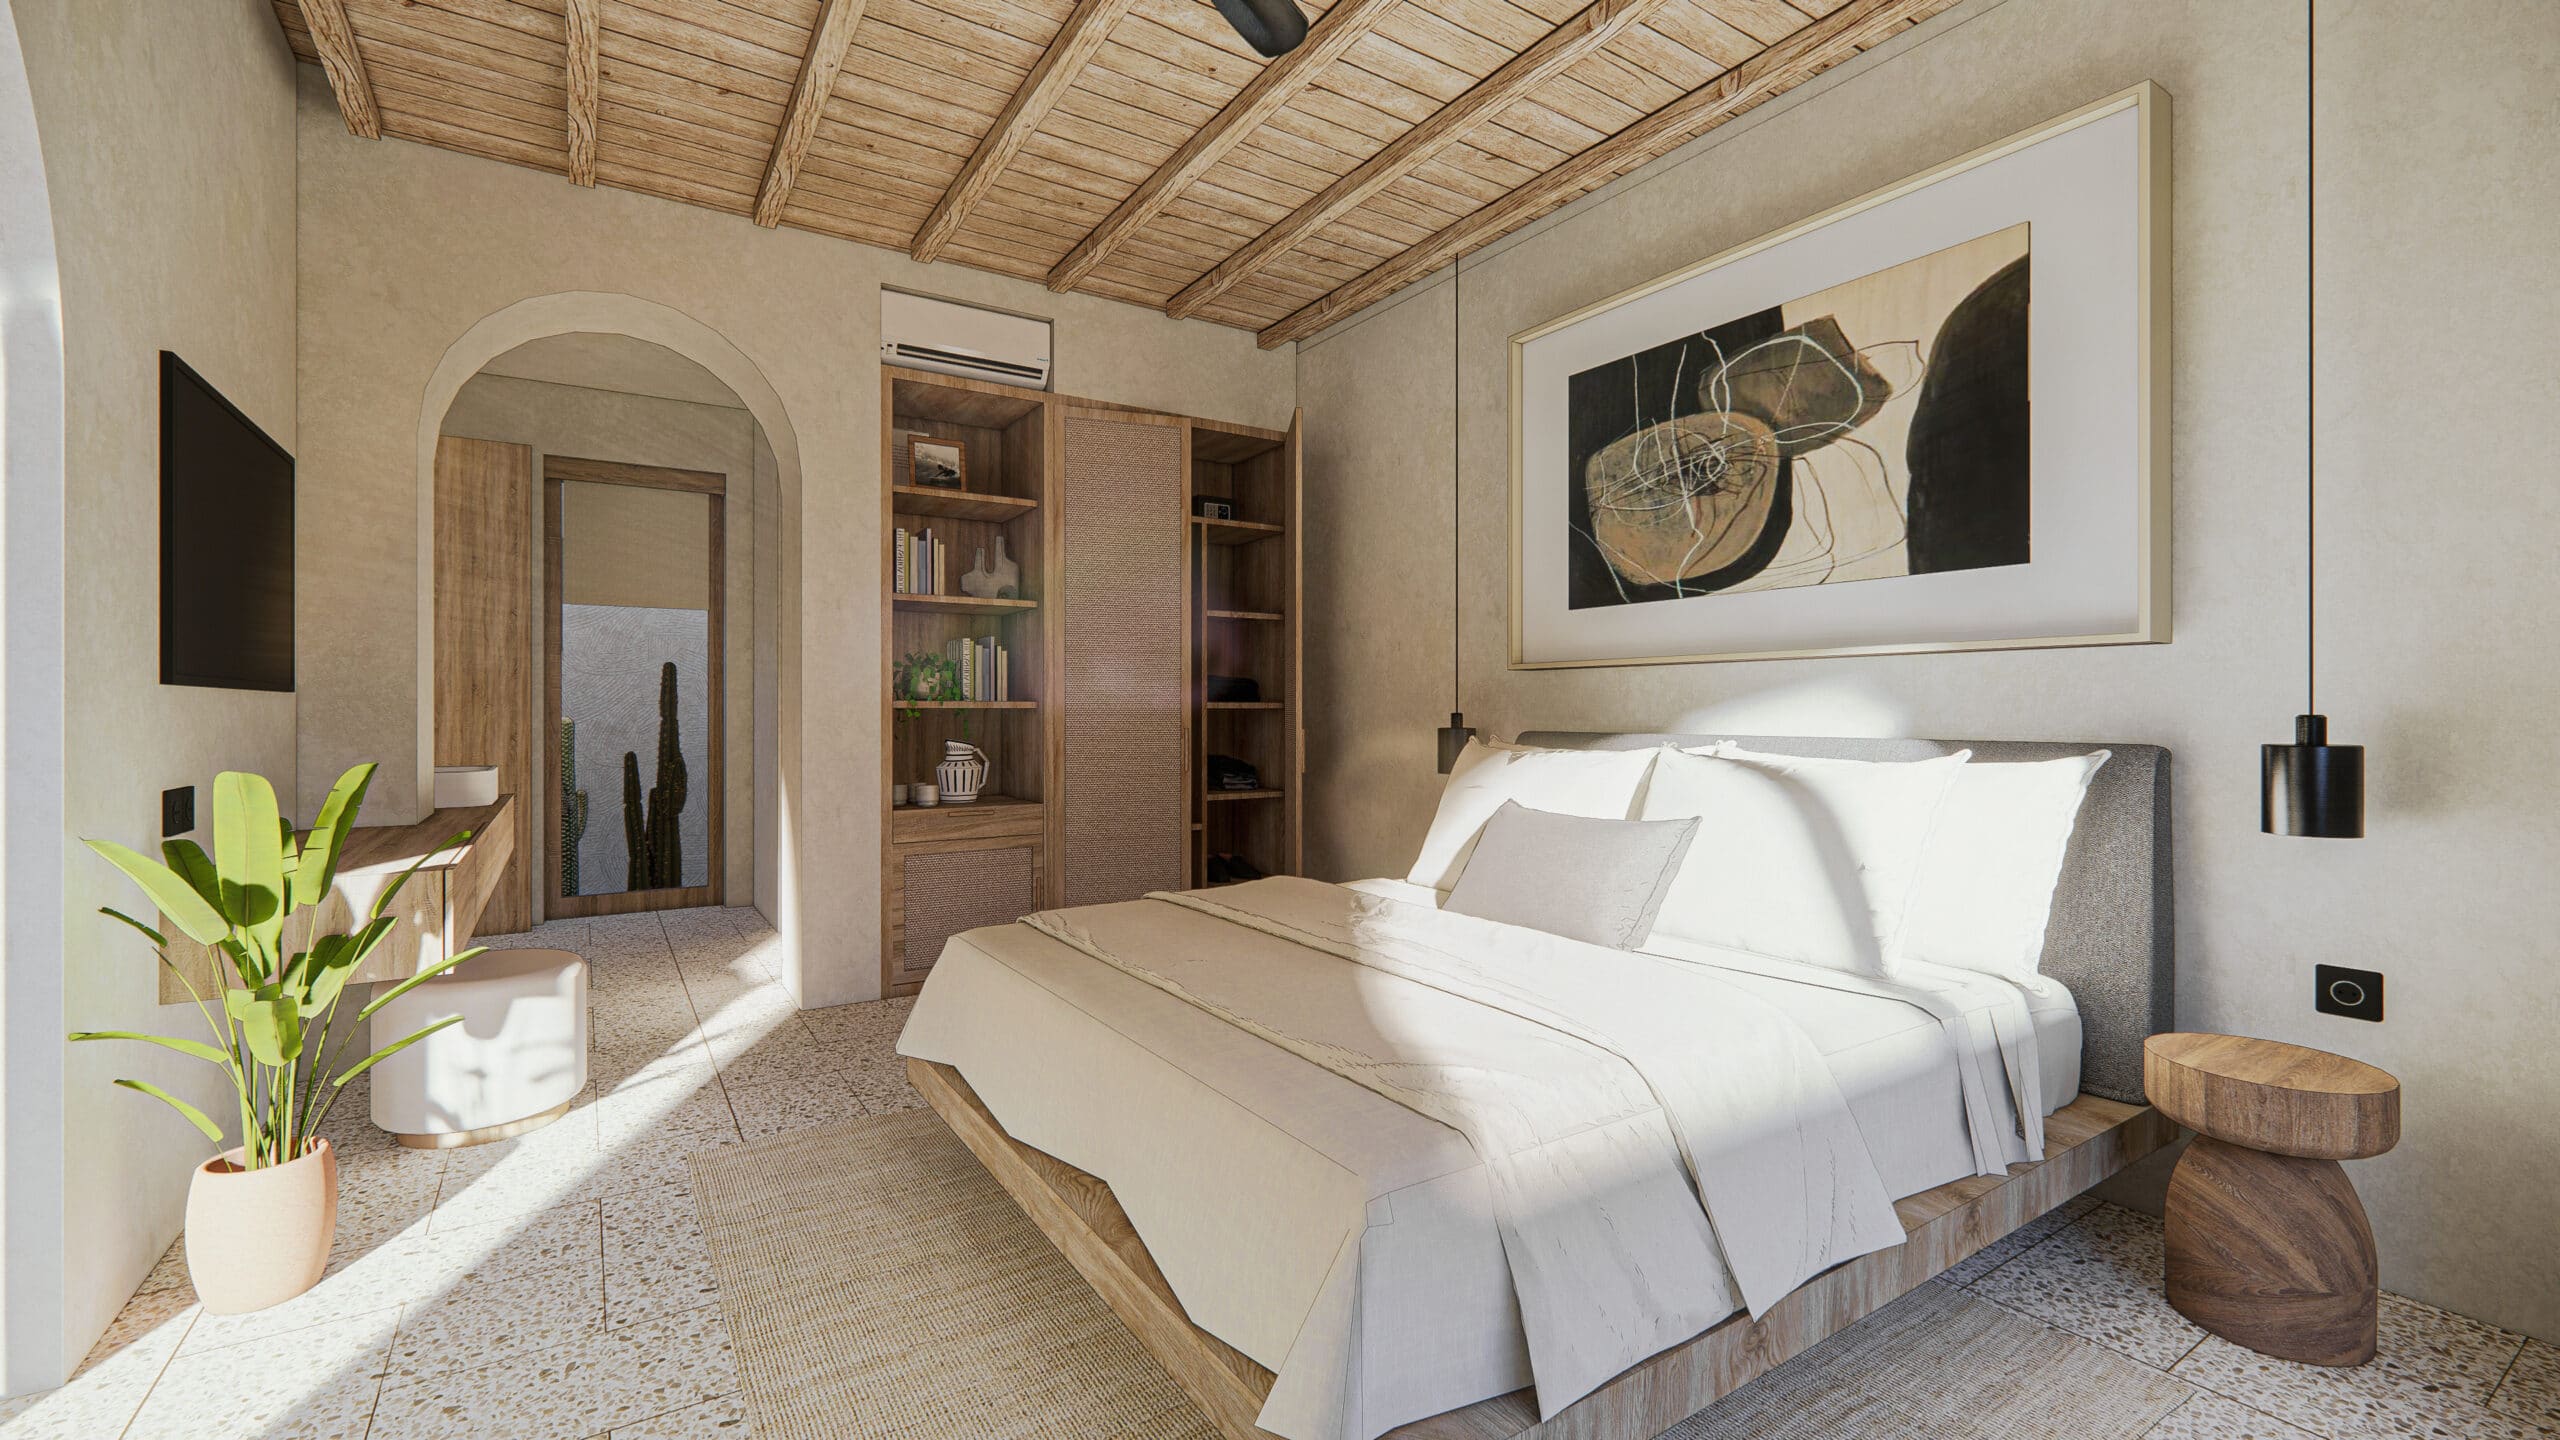 Design Assembly - Michael Utomo Villa - Bali Architect - Interior Design - Bali Villa - Bedroom - Wooden Facade